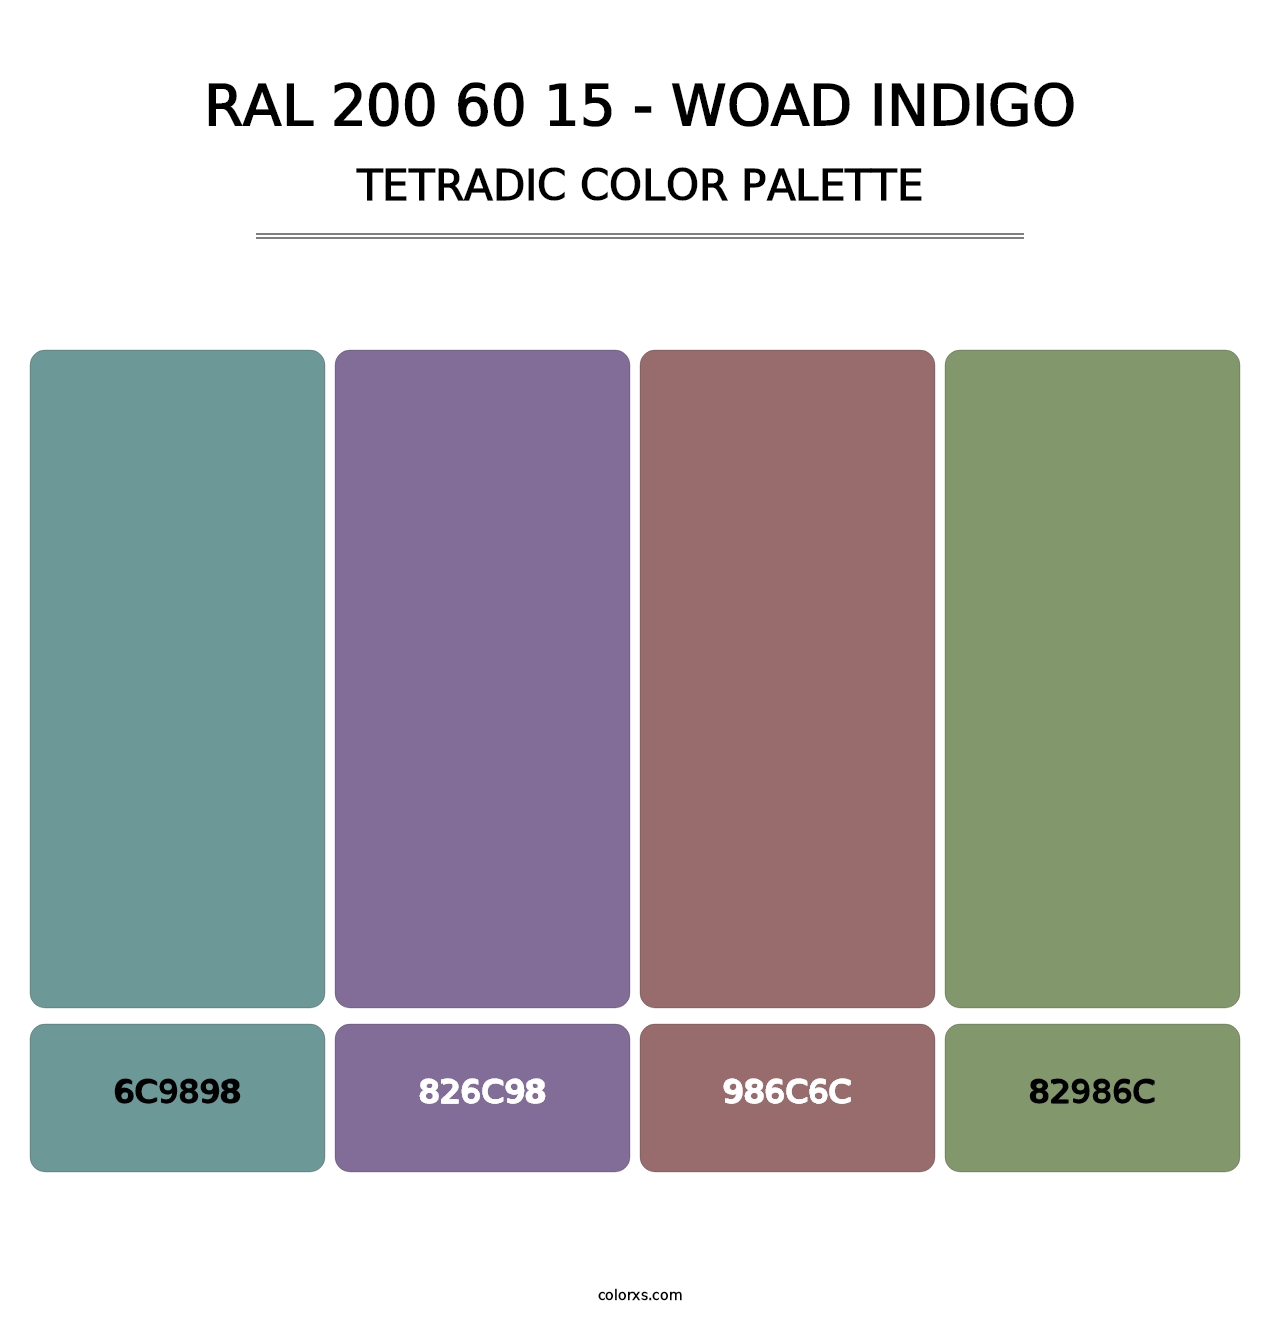 RAL 200 60 15 - Woad Indigo - Tetradic Color Palette